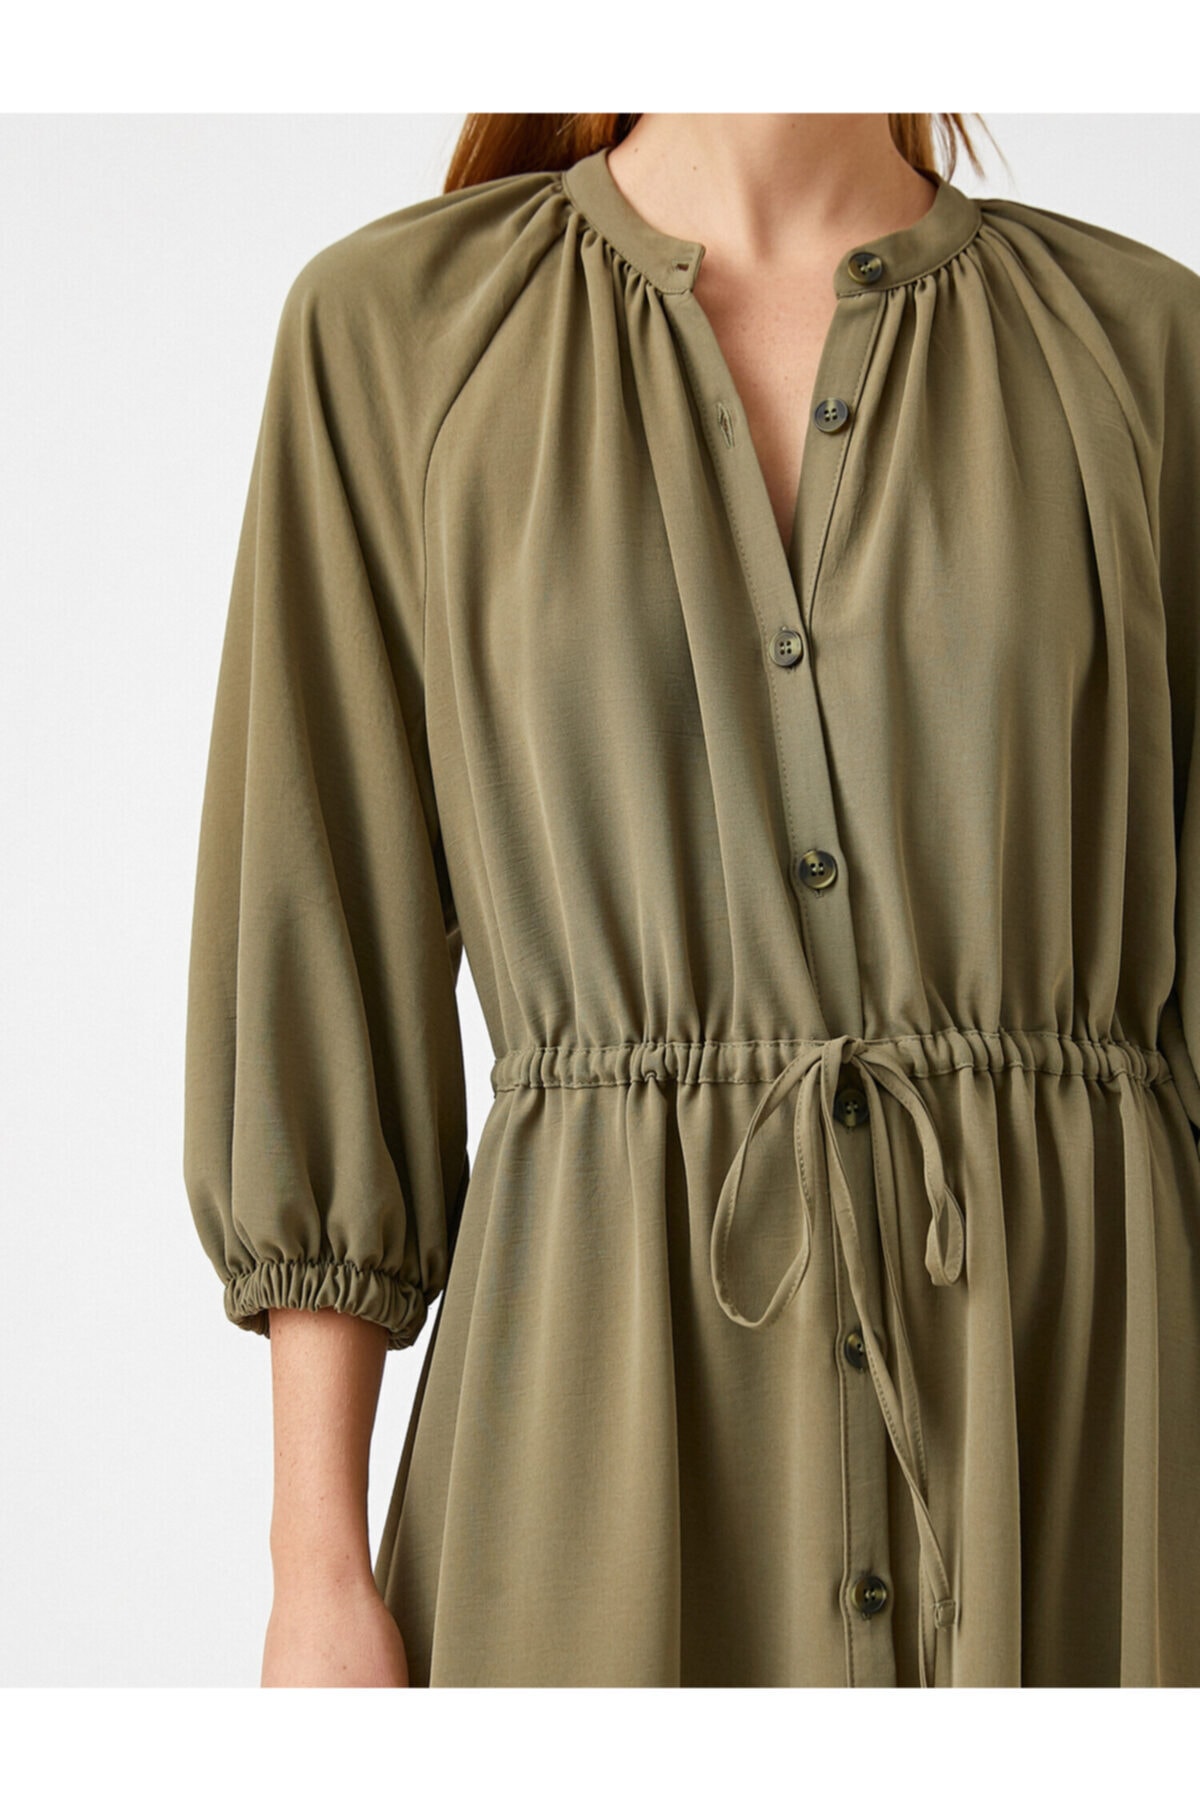 Koton Kleid Khaki Asymmetrisch Fast ausverkauft FN7873